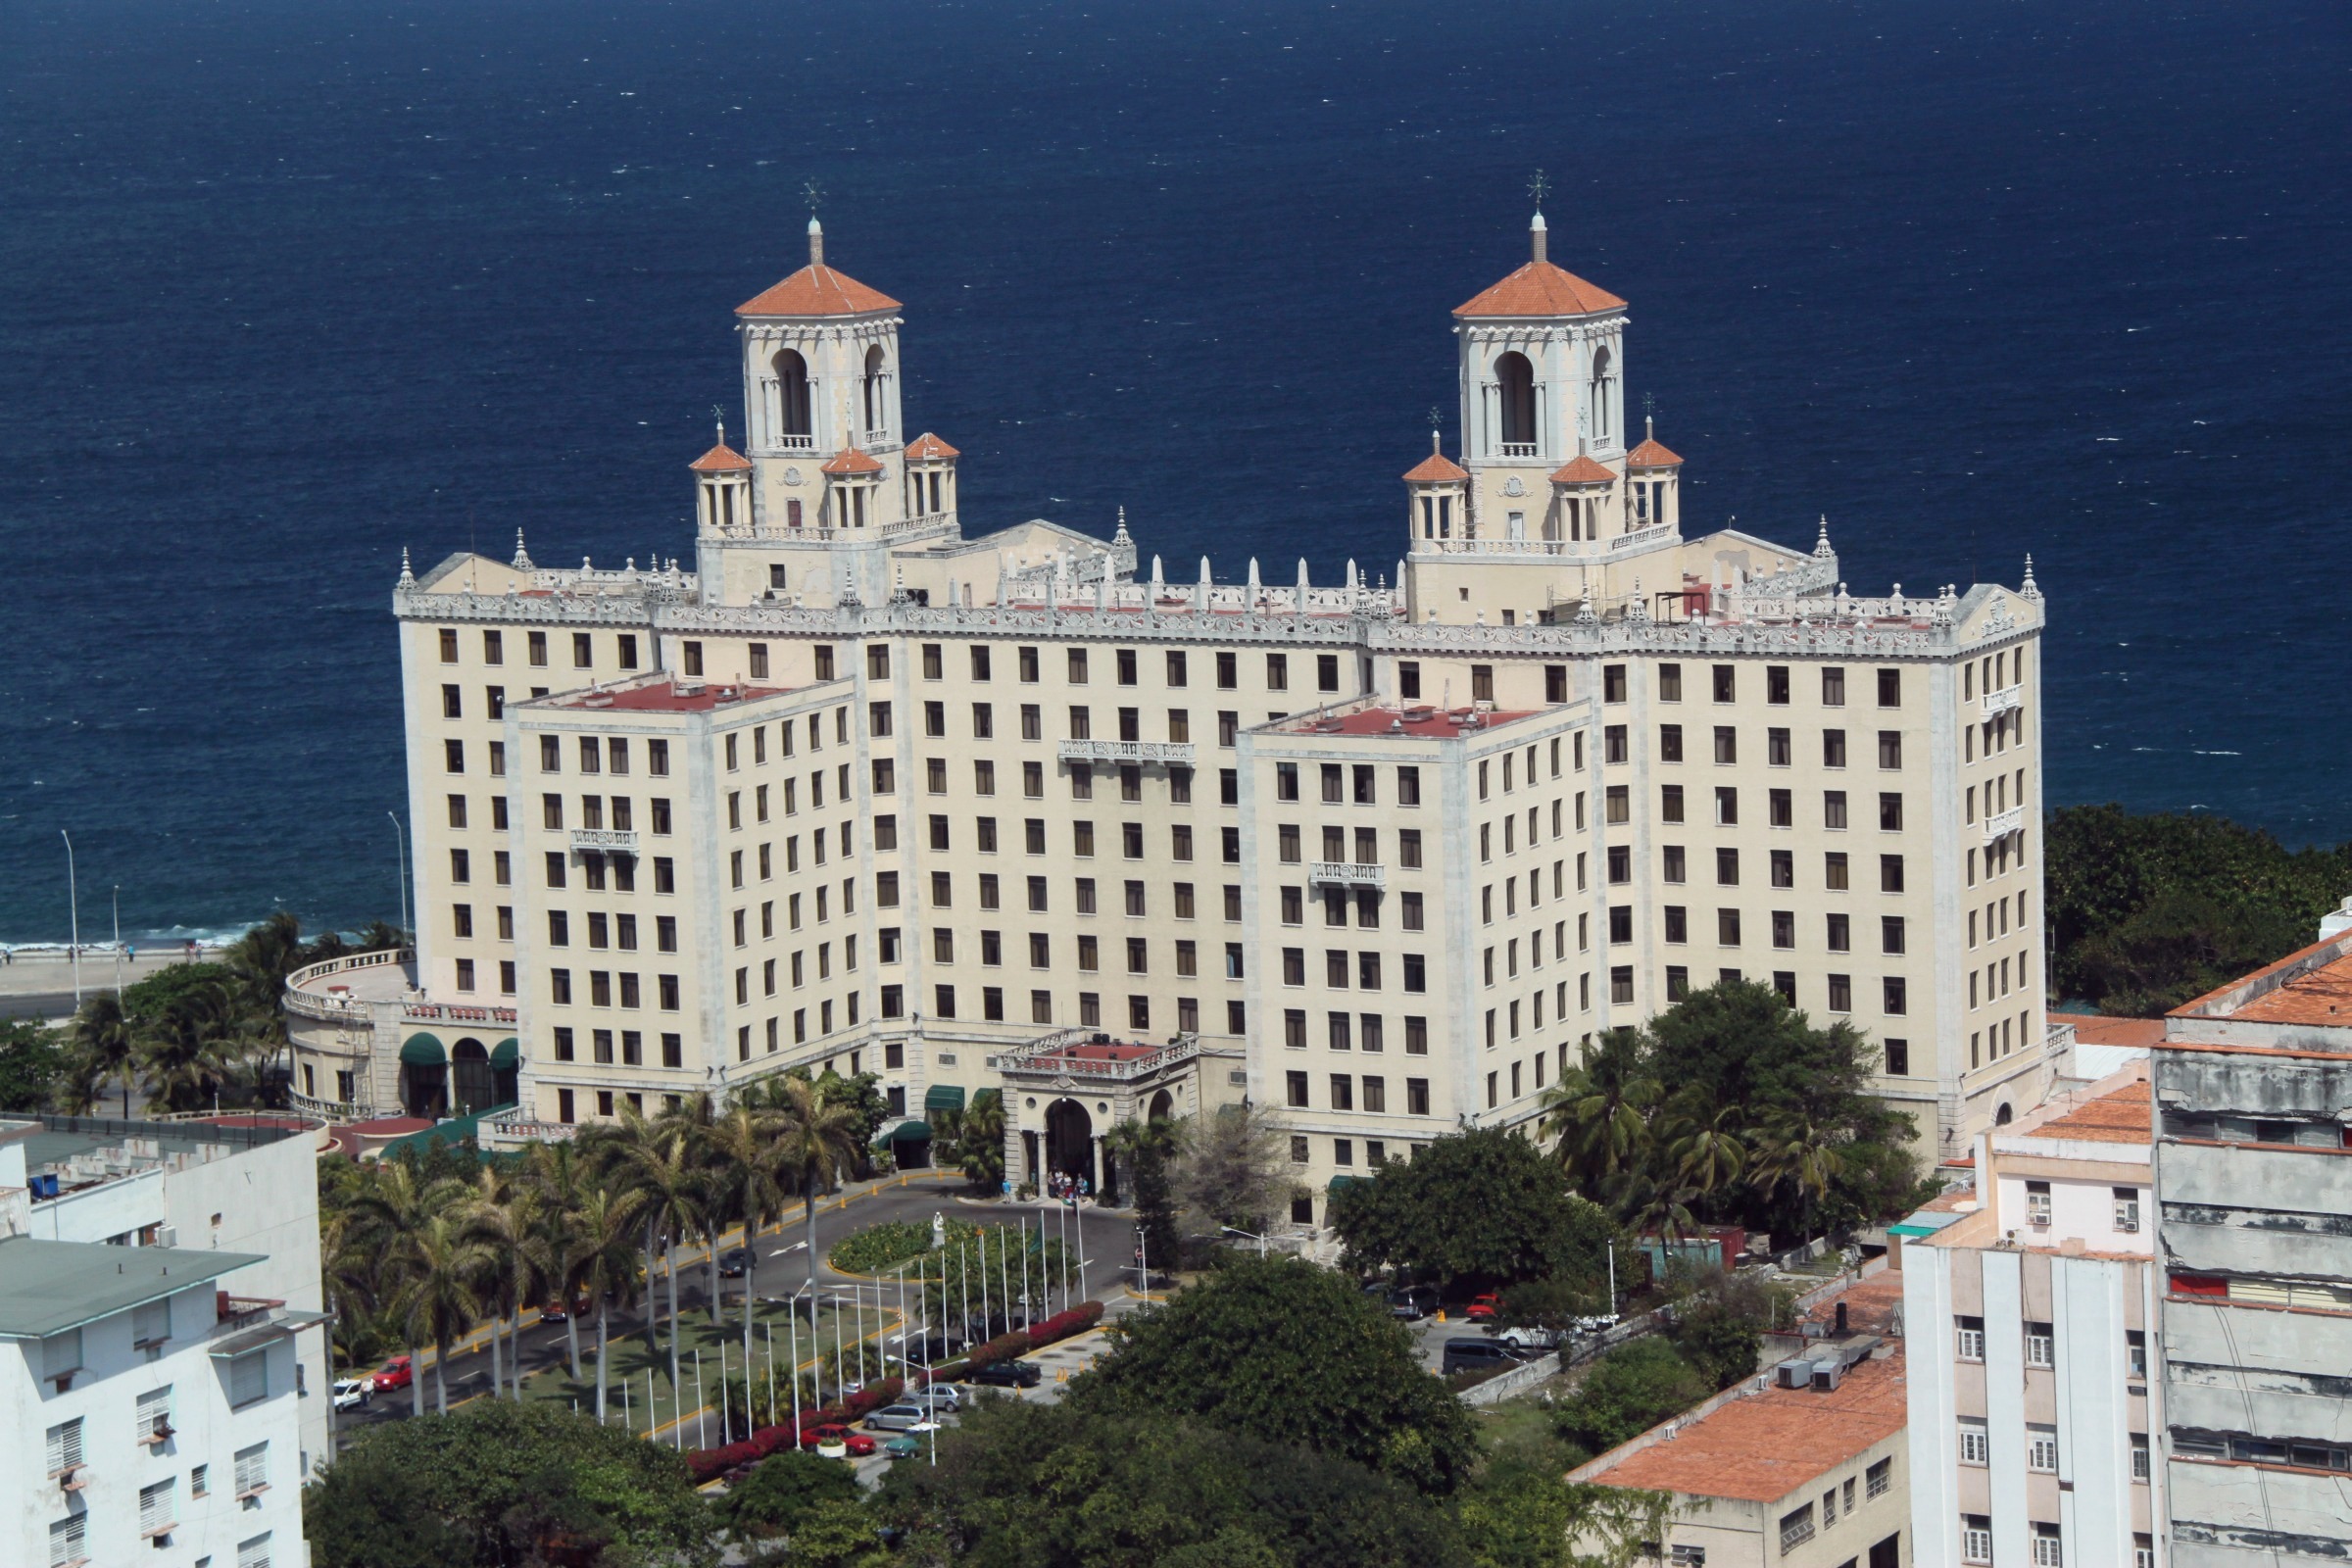 Hotel Nacional de Cuba - Wikipedia